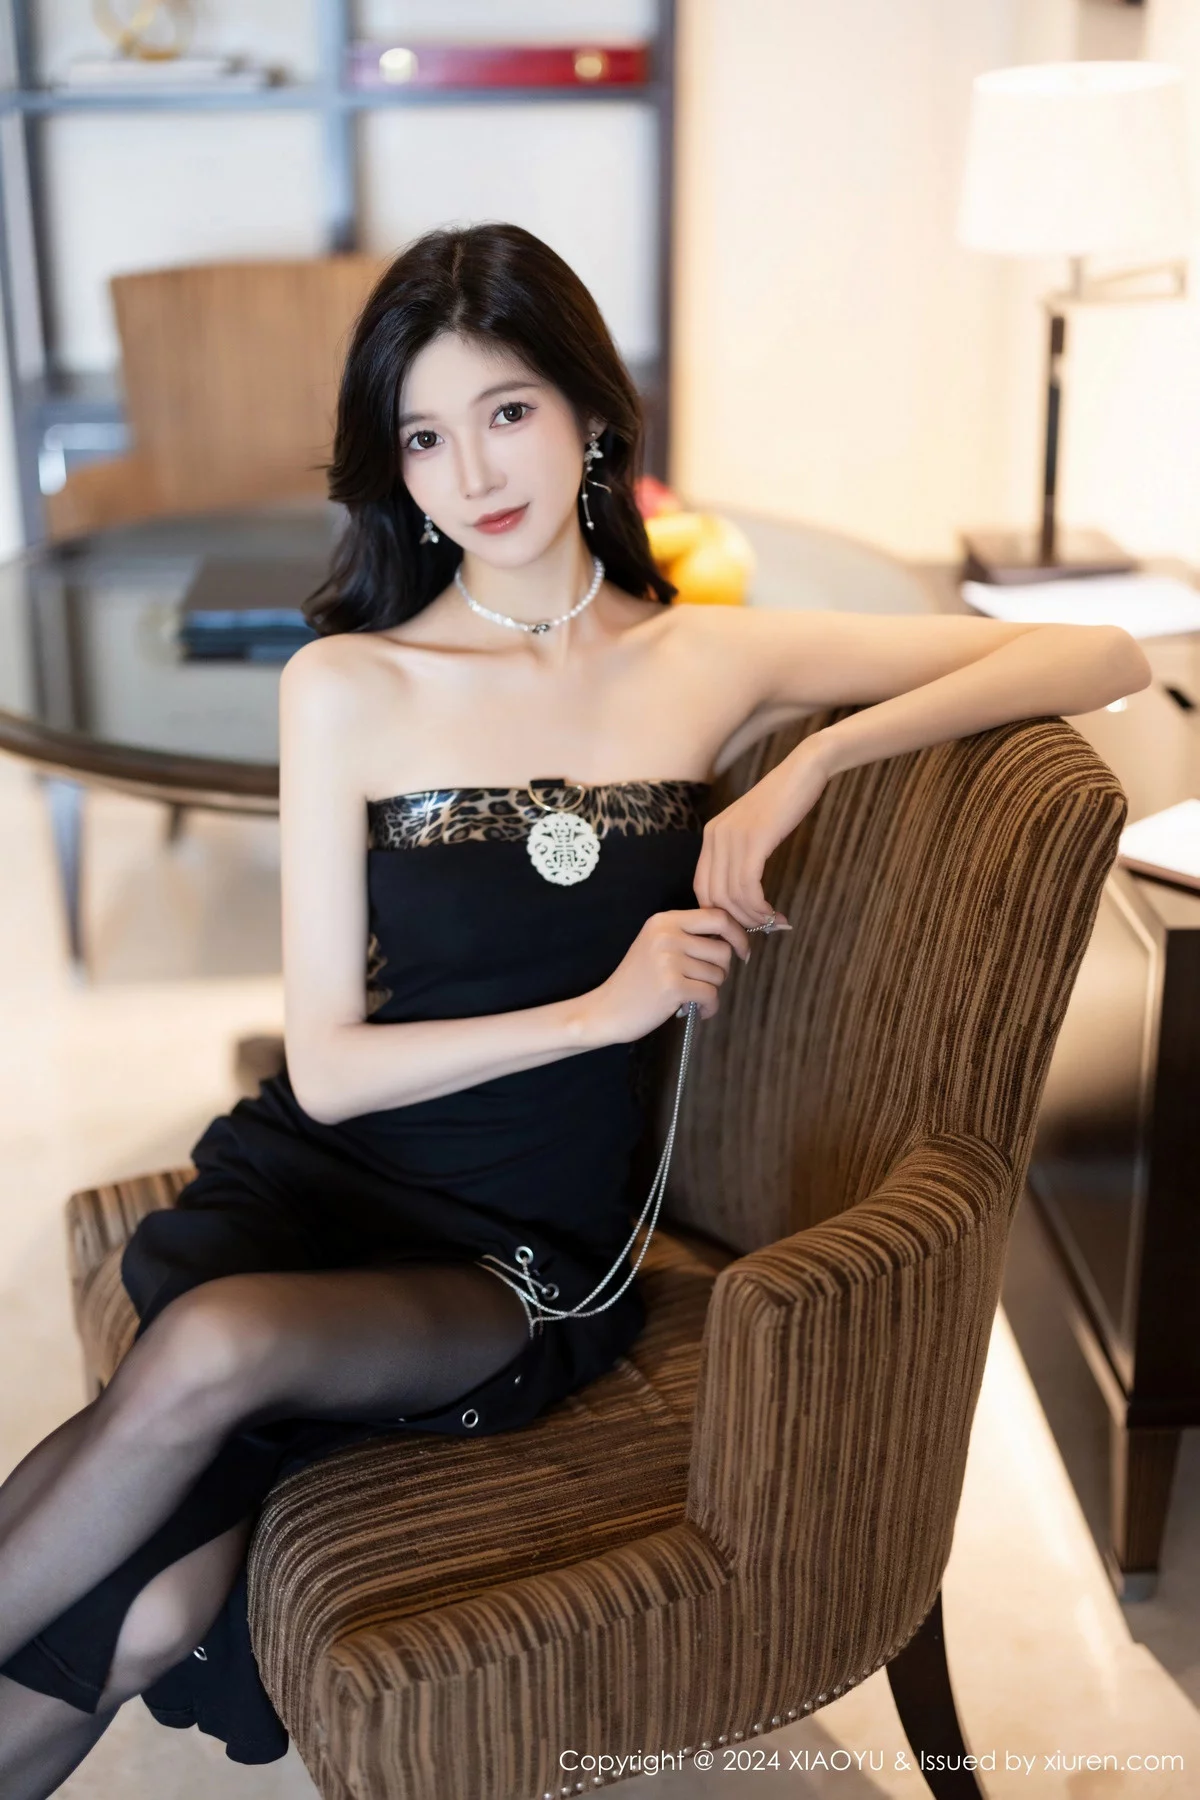 [XiaoYu画语界]Vol.1201_模特程程程白色吊带长裙+性感黑色服饰秀曼妙身姿迷人诱惑写真81P